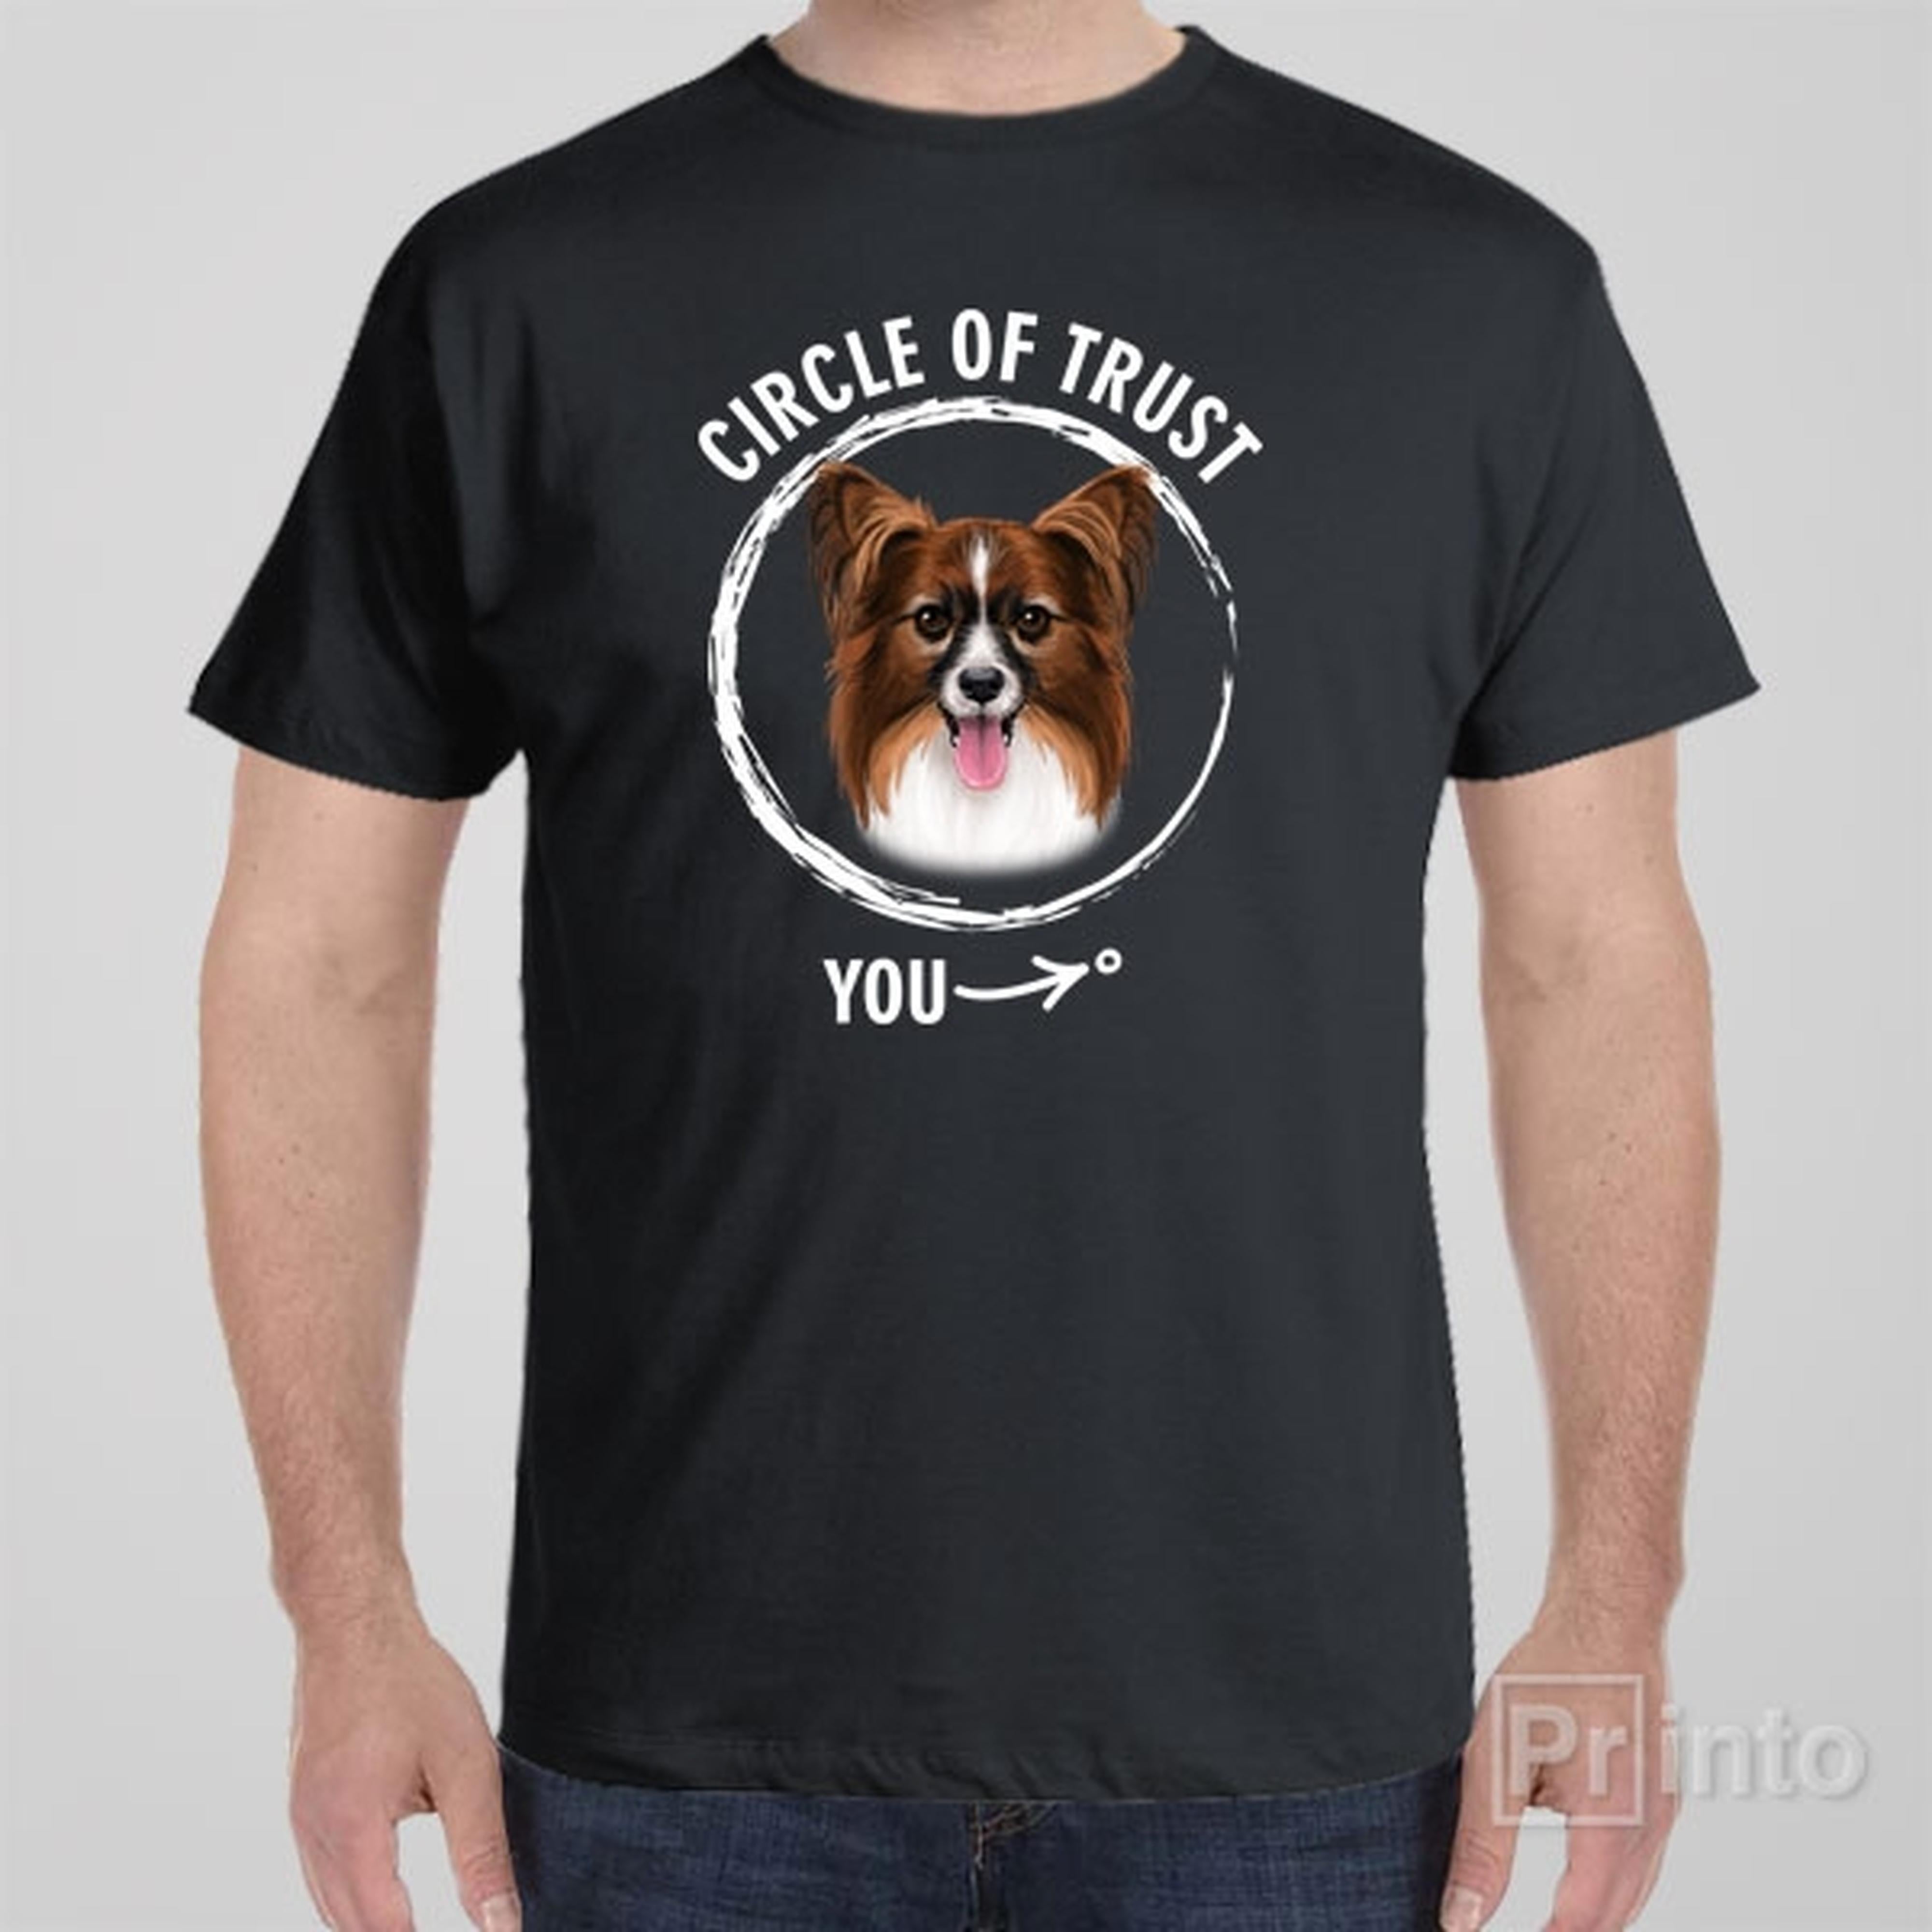 circle-of-trust-papillion-t-shirt